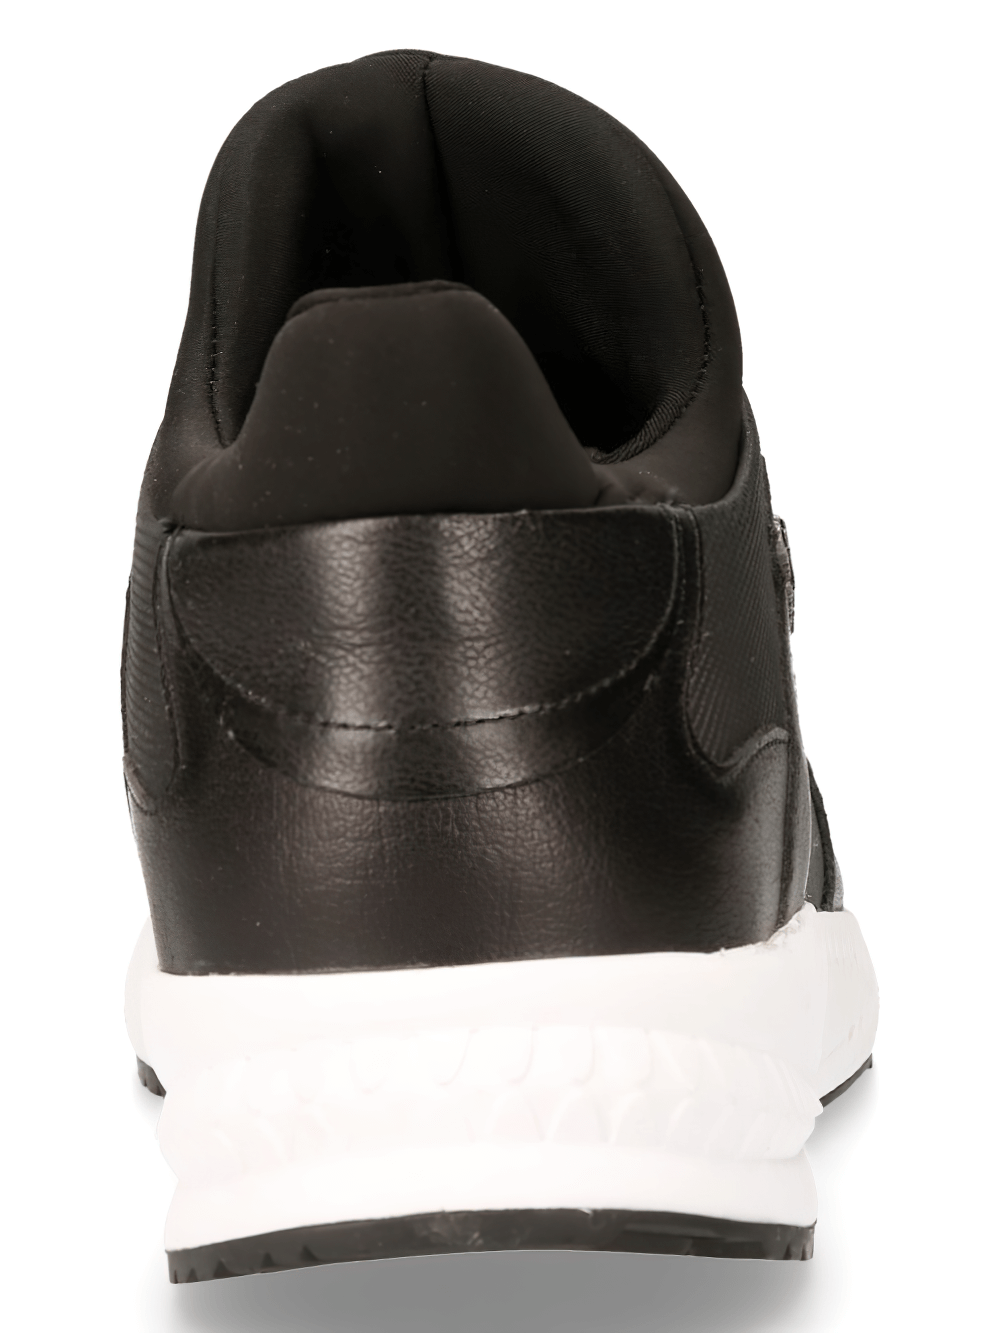 NEW ROCK Sleek Urban Unisex Black Sports Sneakers